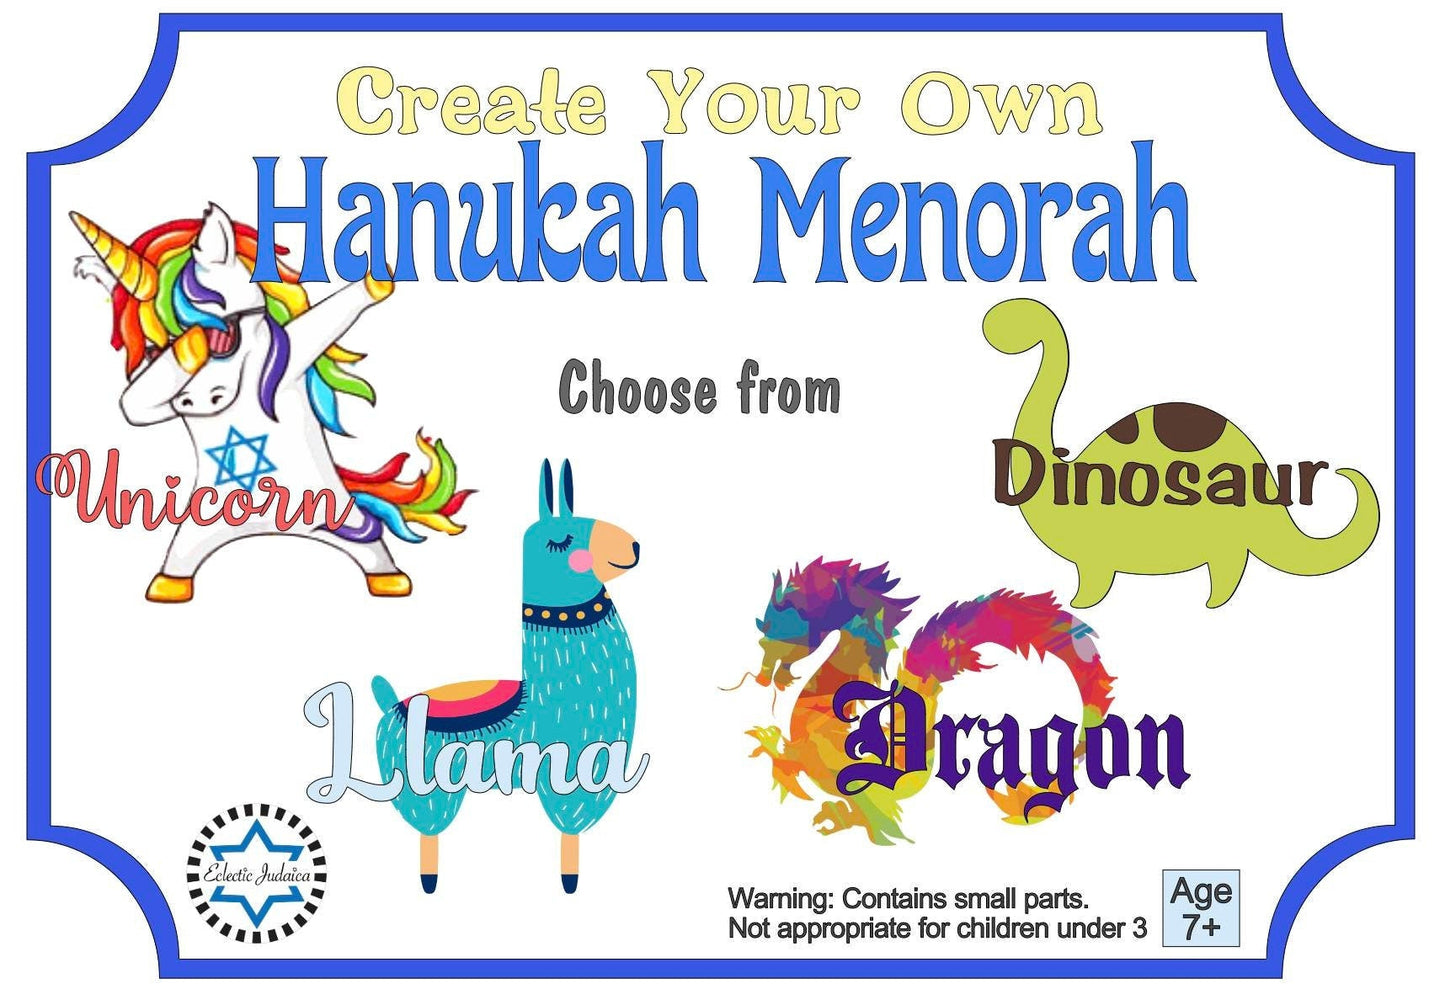 Make Your Own Unicorn Menorah Kit!